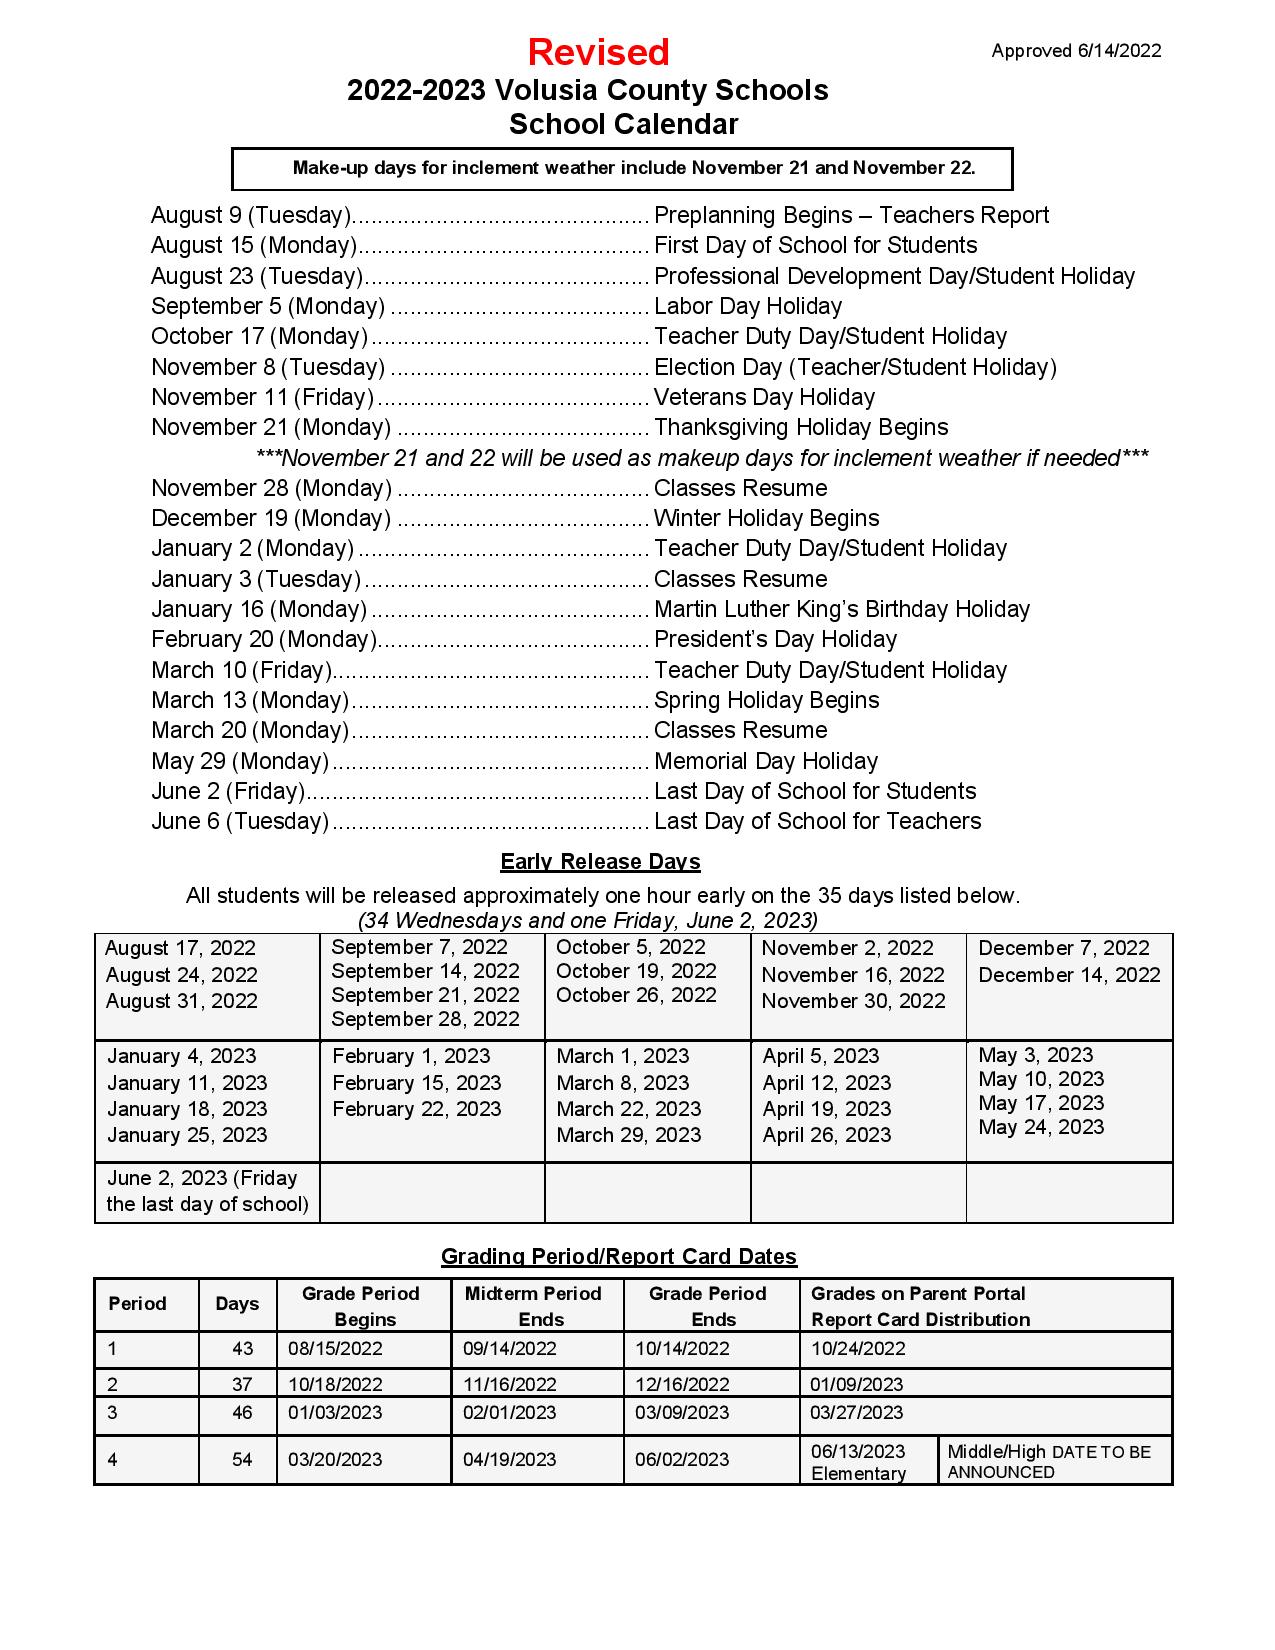 Volusia County Schools Calendar Holidays 20222023 PDF